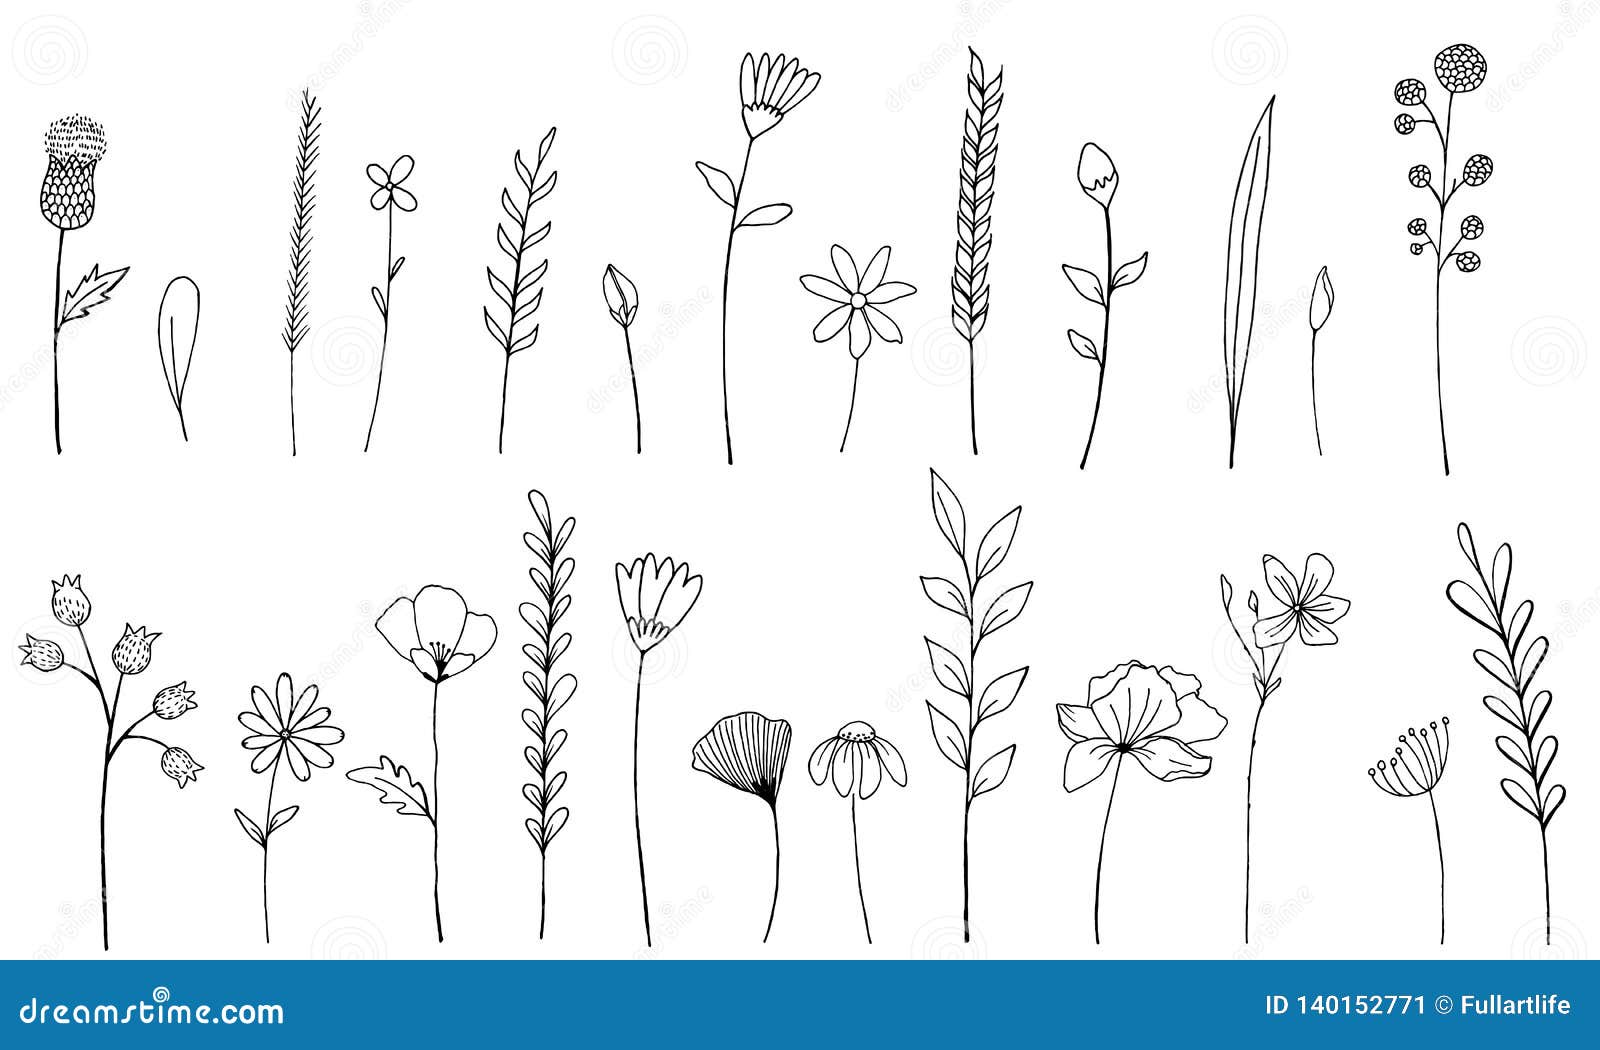 Field of Wildflowers vector illustration